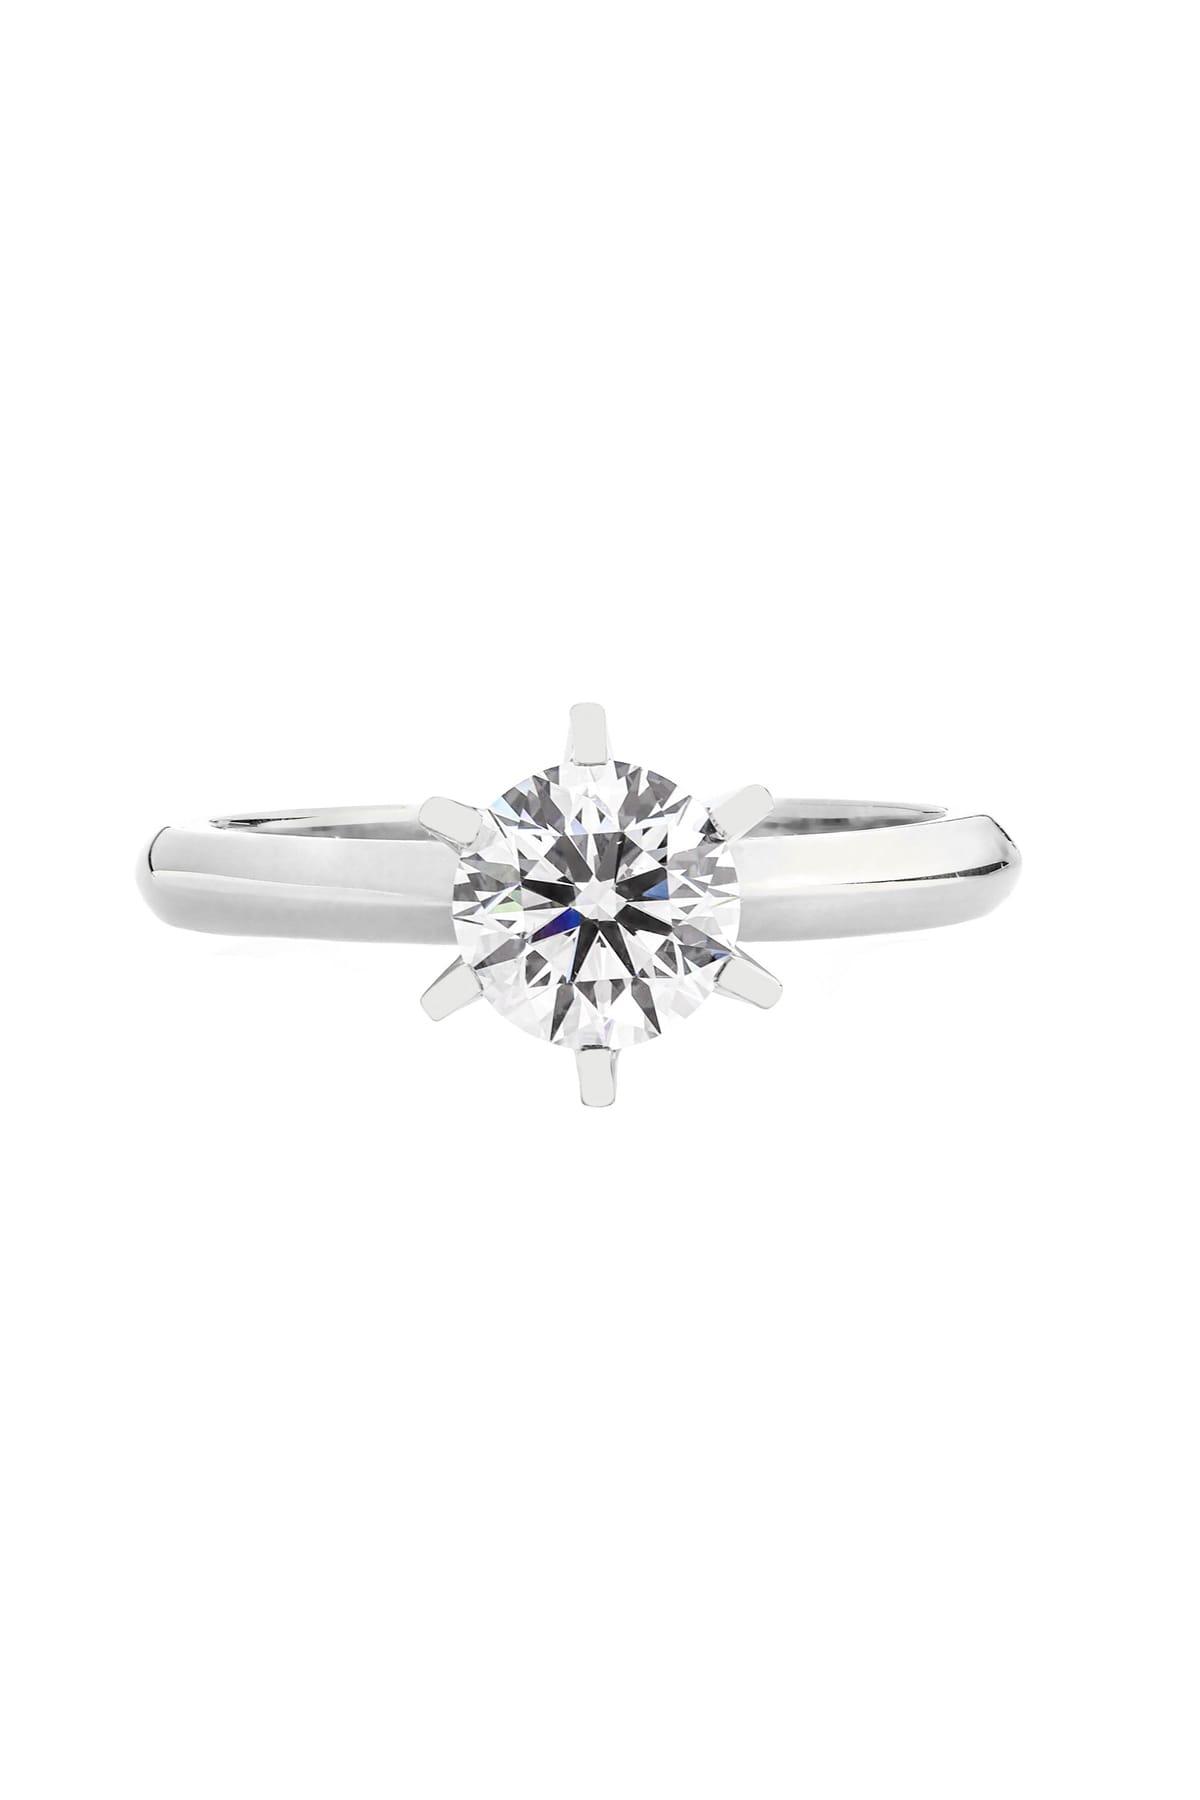 LeGassick 1.00ct Diamond Solitaire Engagement Ring at LeGassick Jewellers Gold Coast, Australia